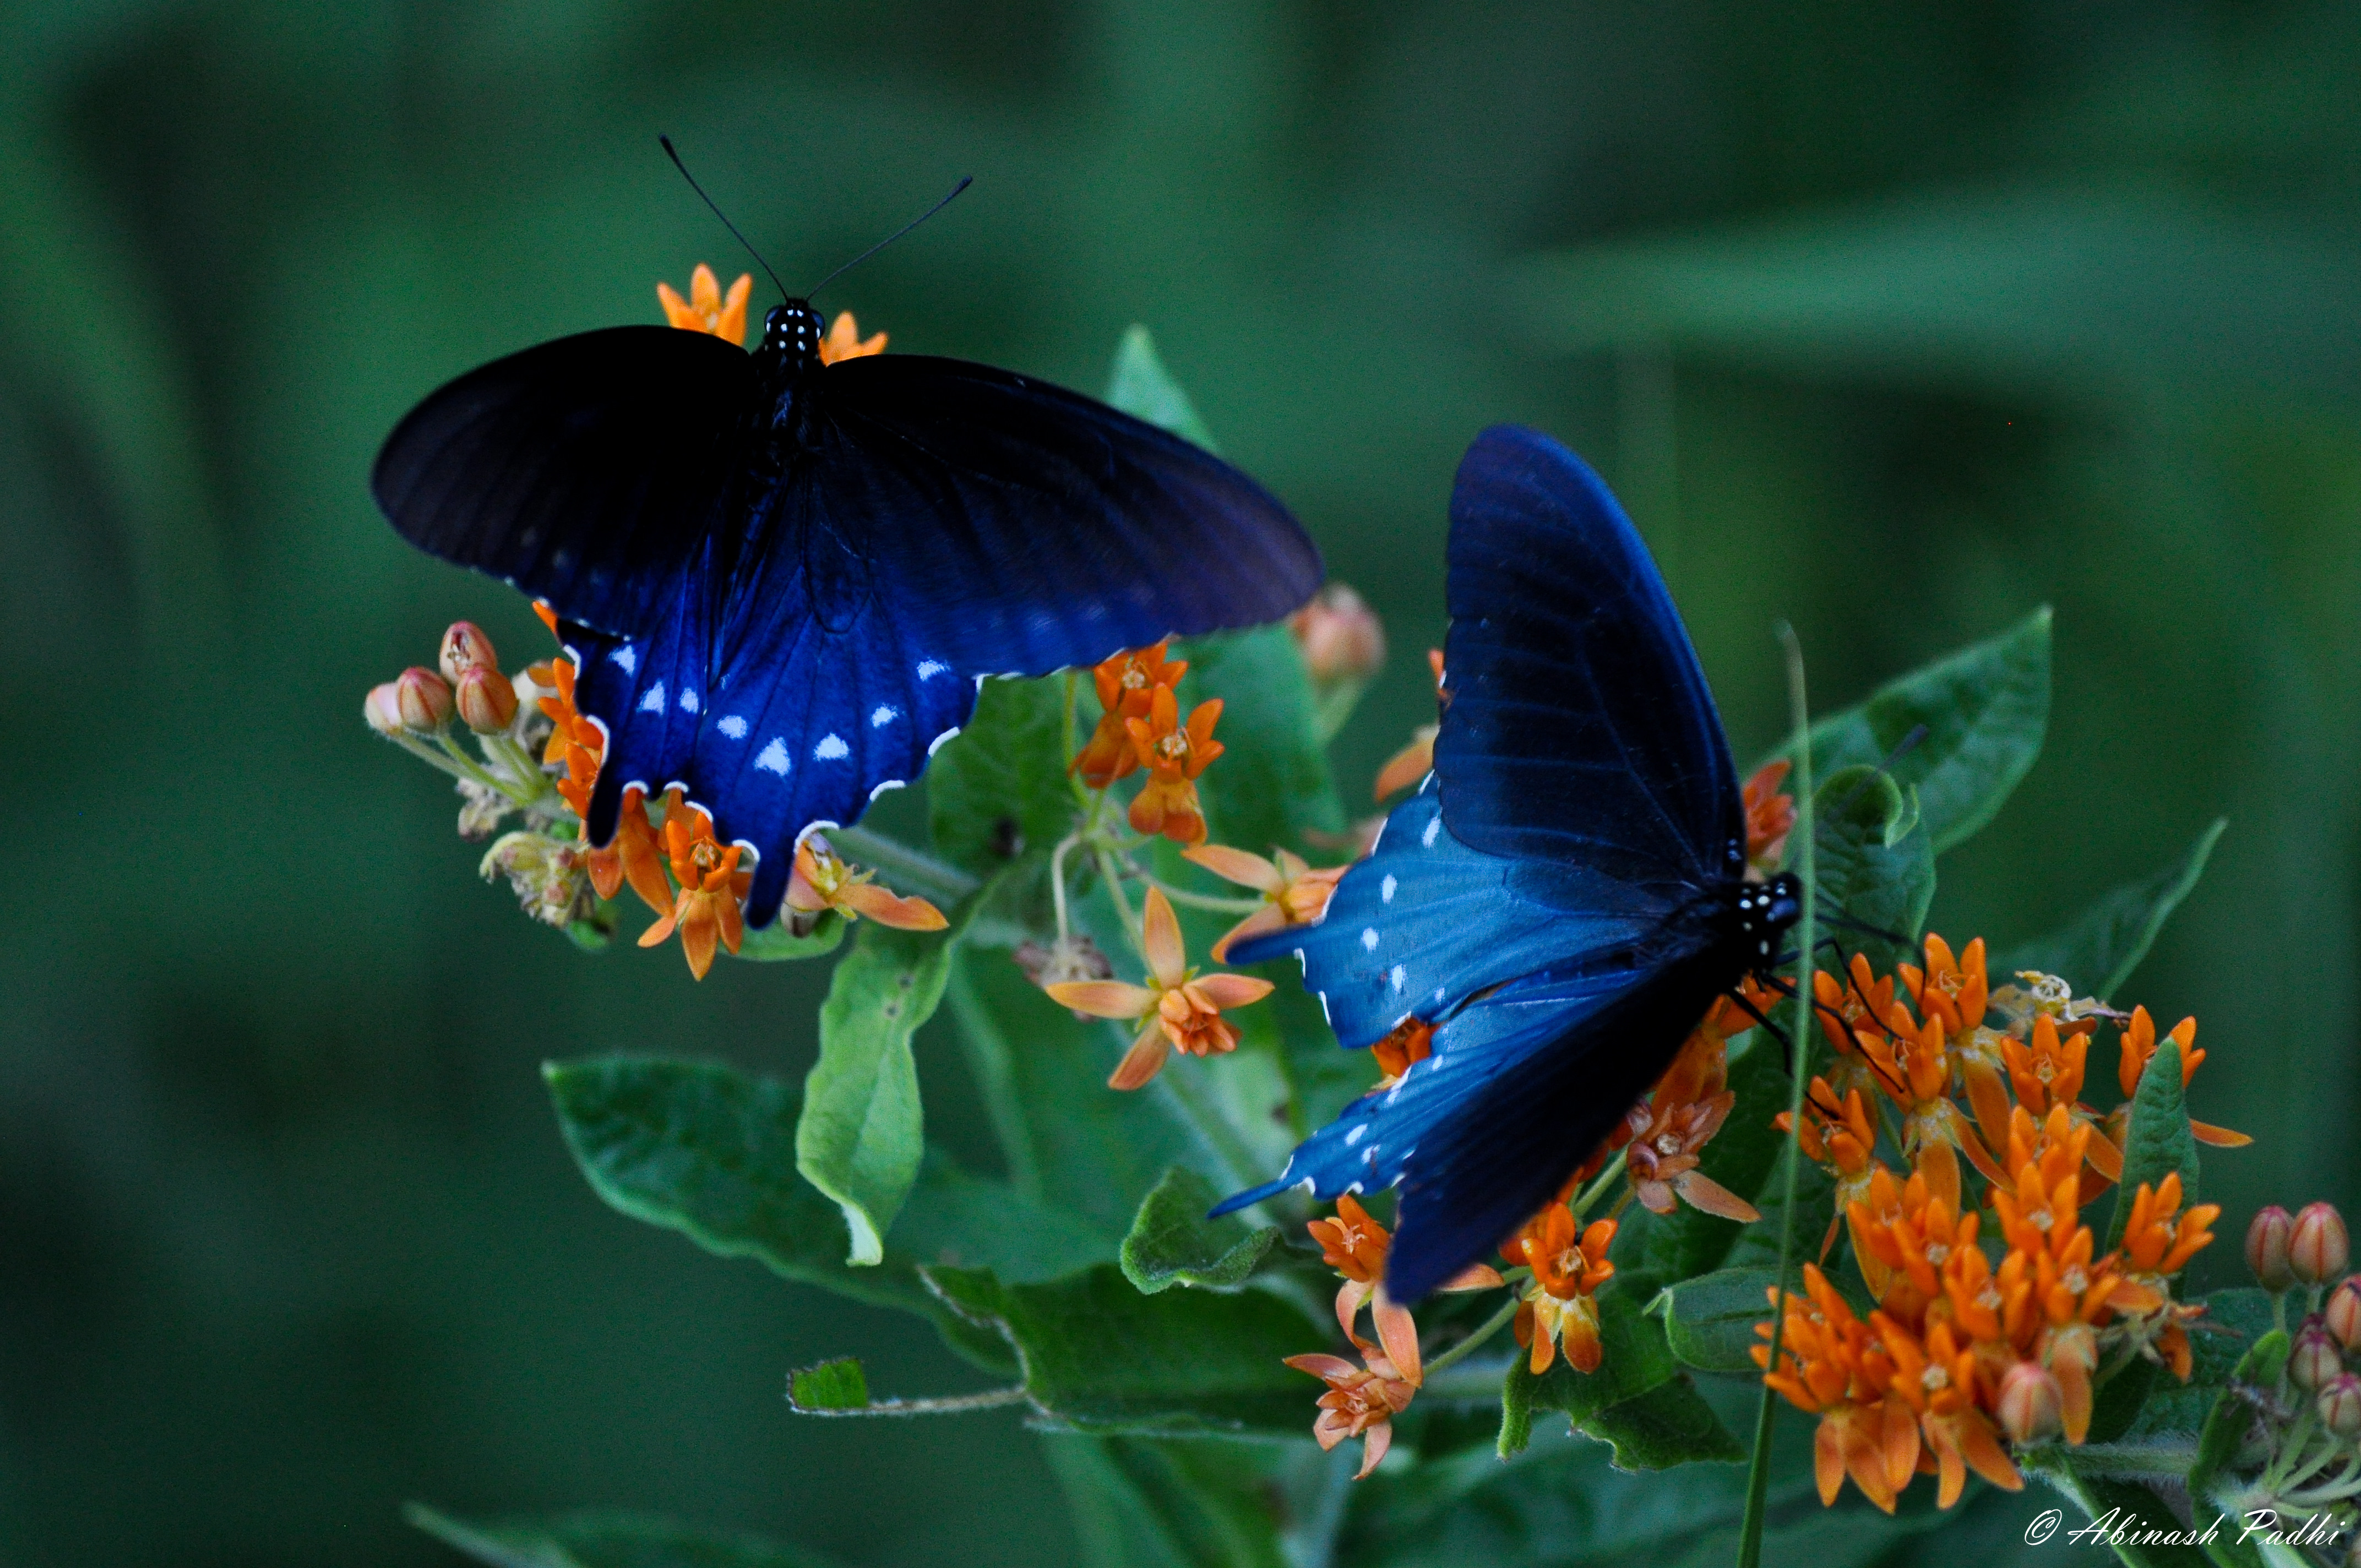 Бабочка с яркими крыльями. Морфо адонис бабочка. Олимпиус Инферно бабочка. Красивые бабочки. Яркие бабочки.